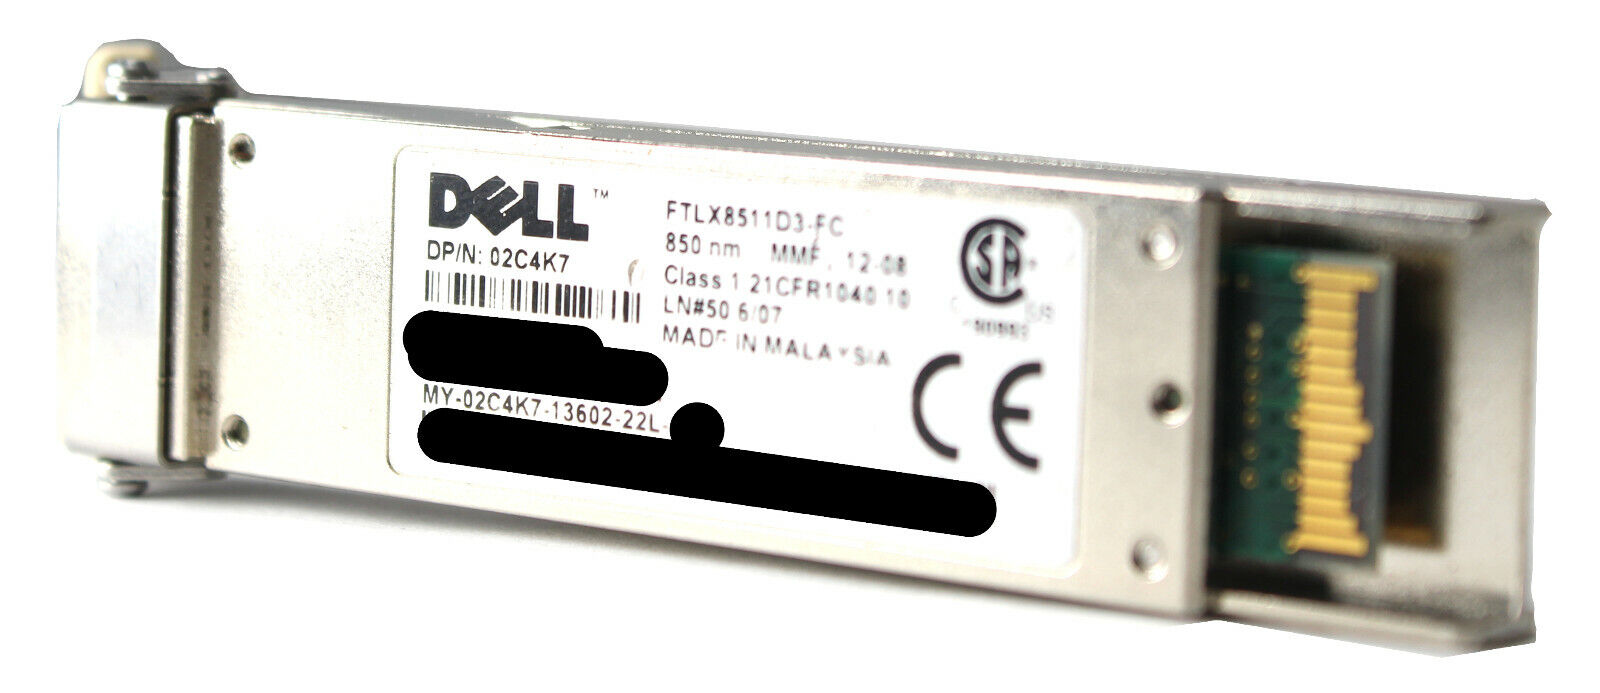 Dell 2C4K7 Dell XFP 10GB SR/SW, 850nm Wavelength Fiber Transceiver